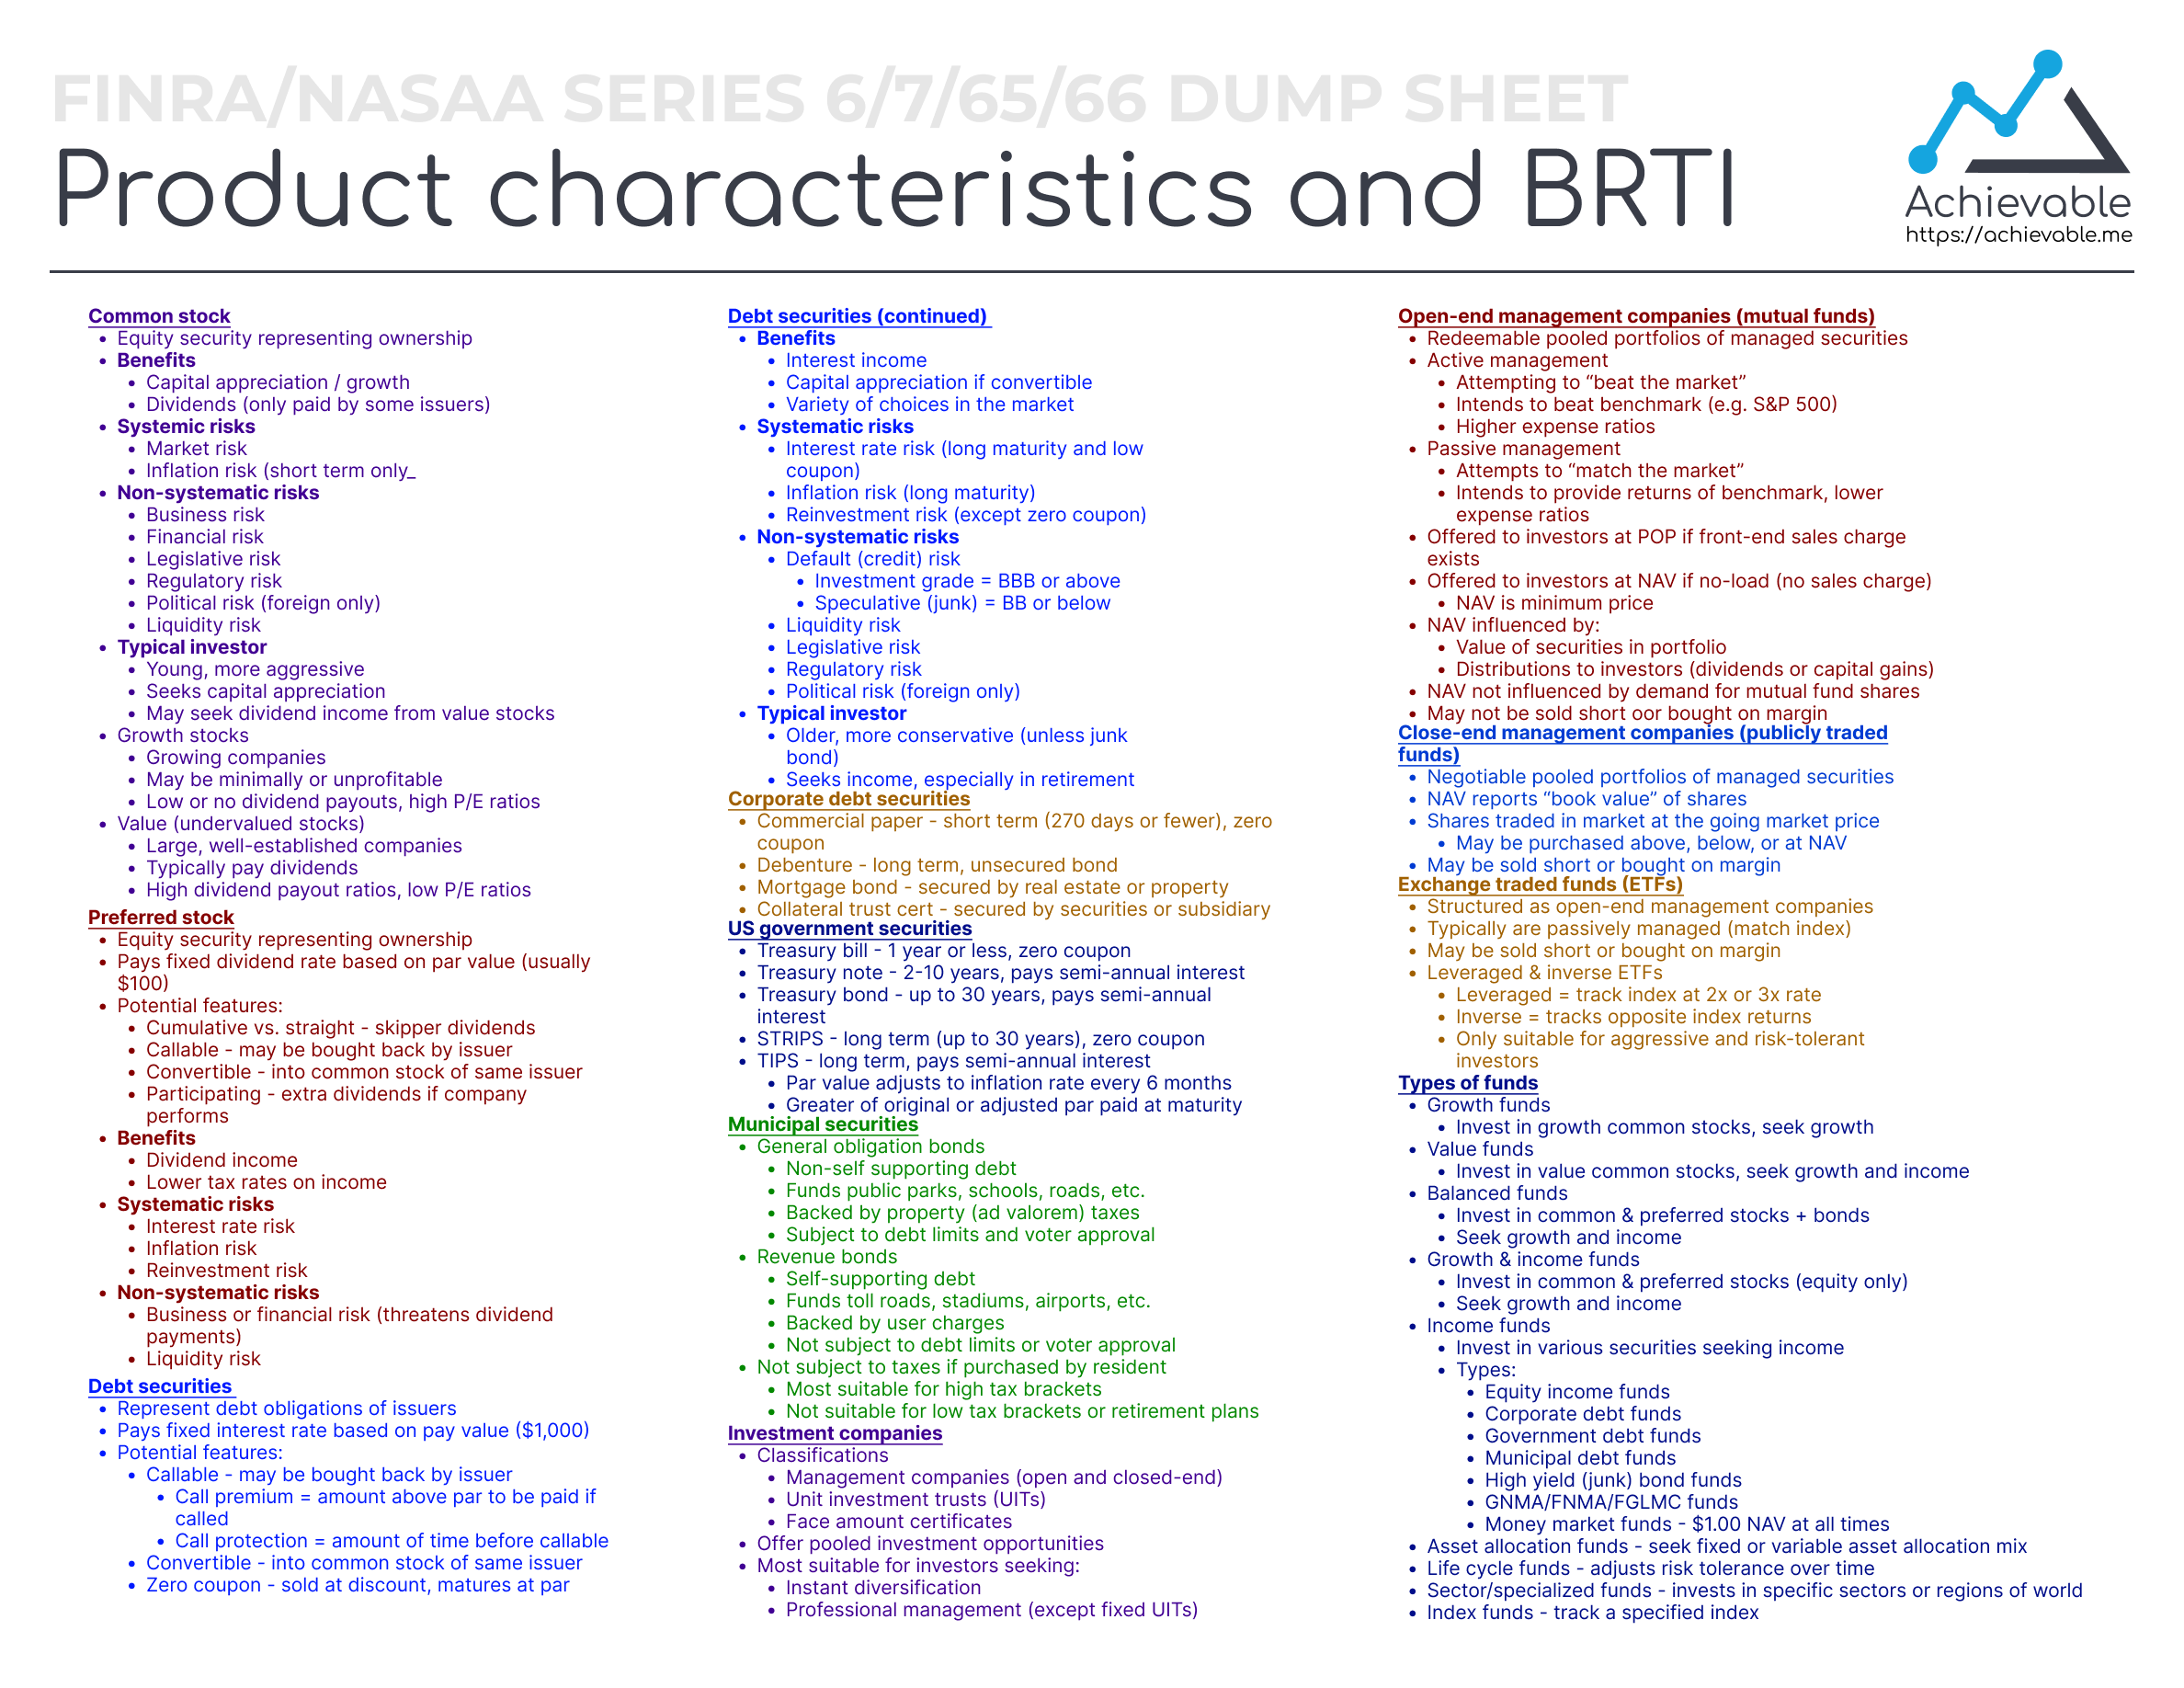 Series 66 Dump Sheet - Product Characteristics and BRTI